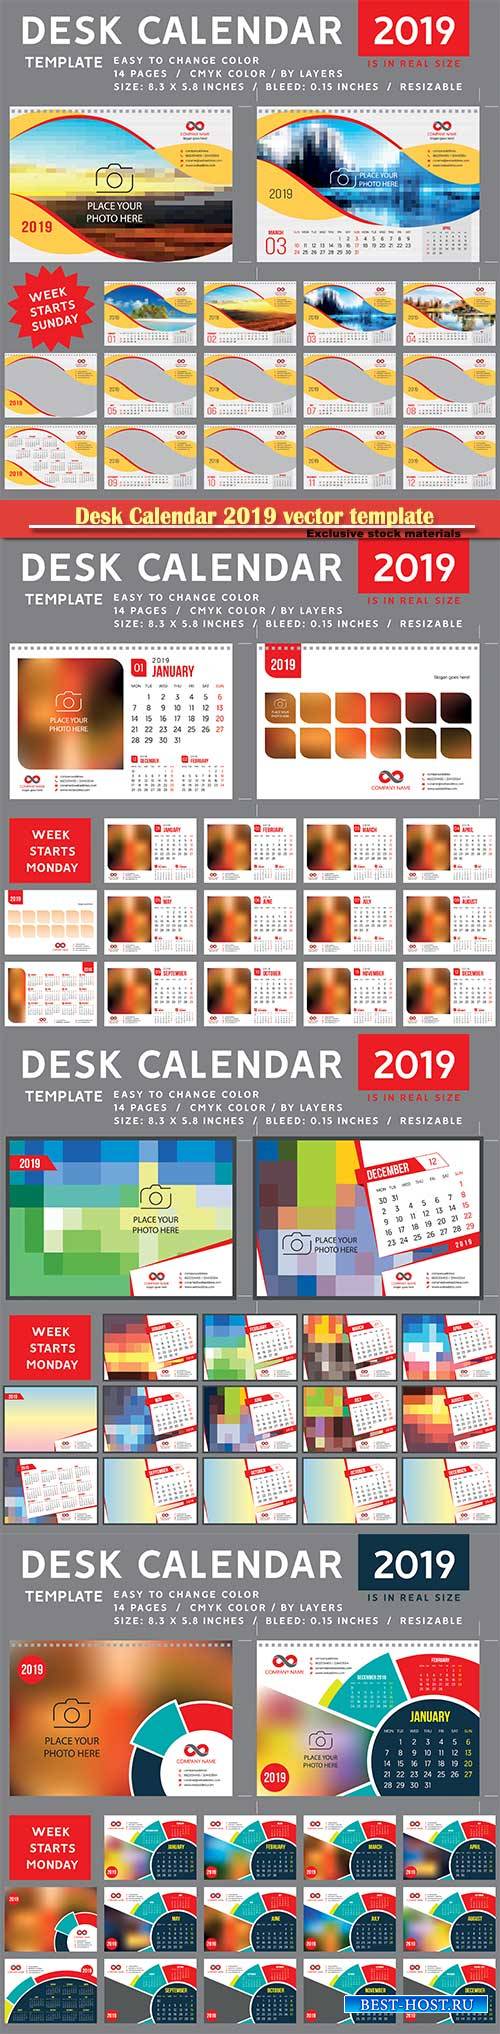 Desk Calendar 2019 vector template, 12 months included # 7